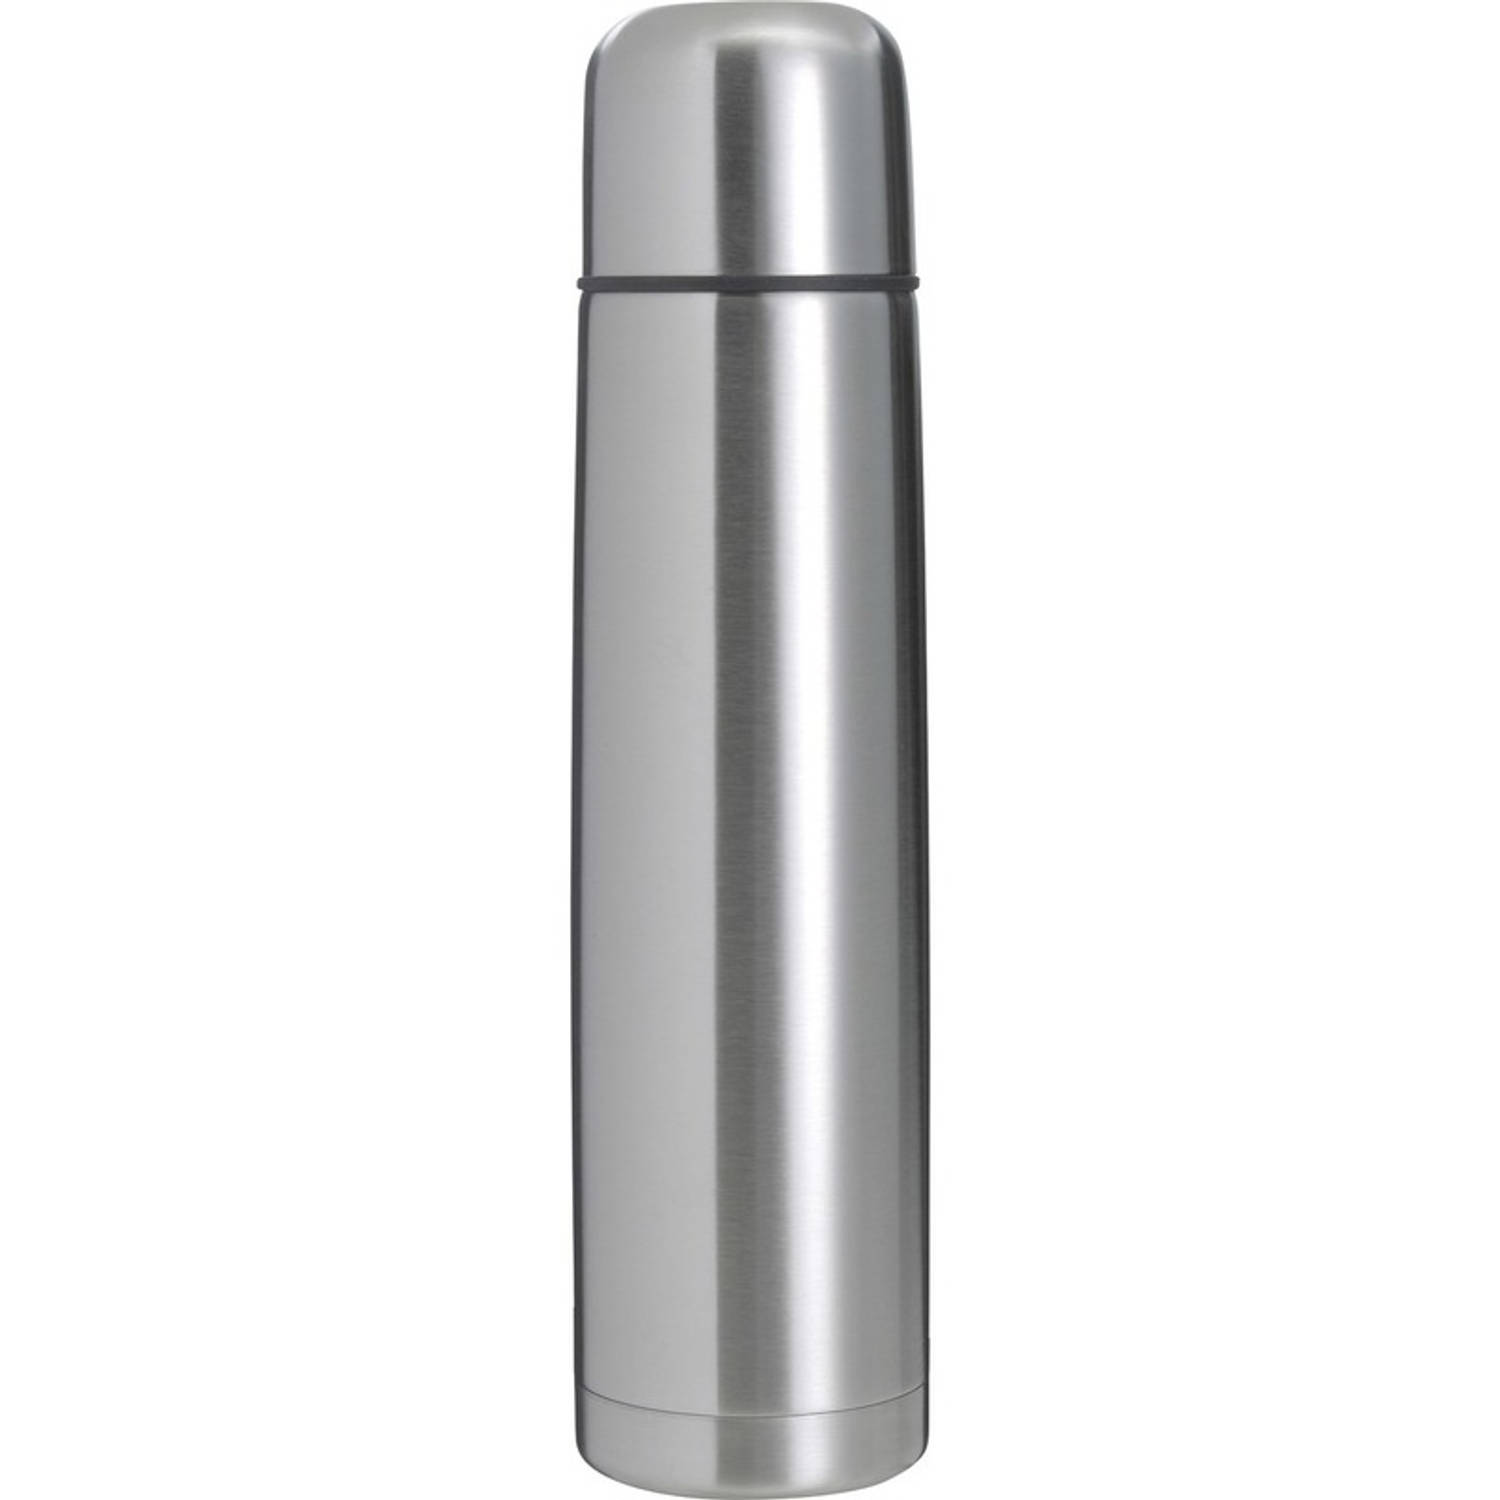 RVS 1 zilver - Thermosflessen | Blokker